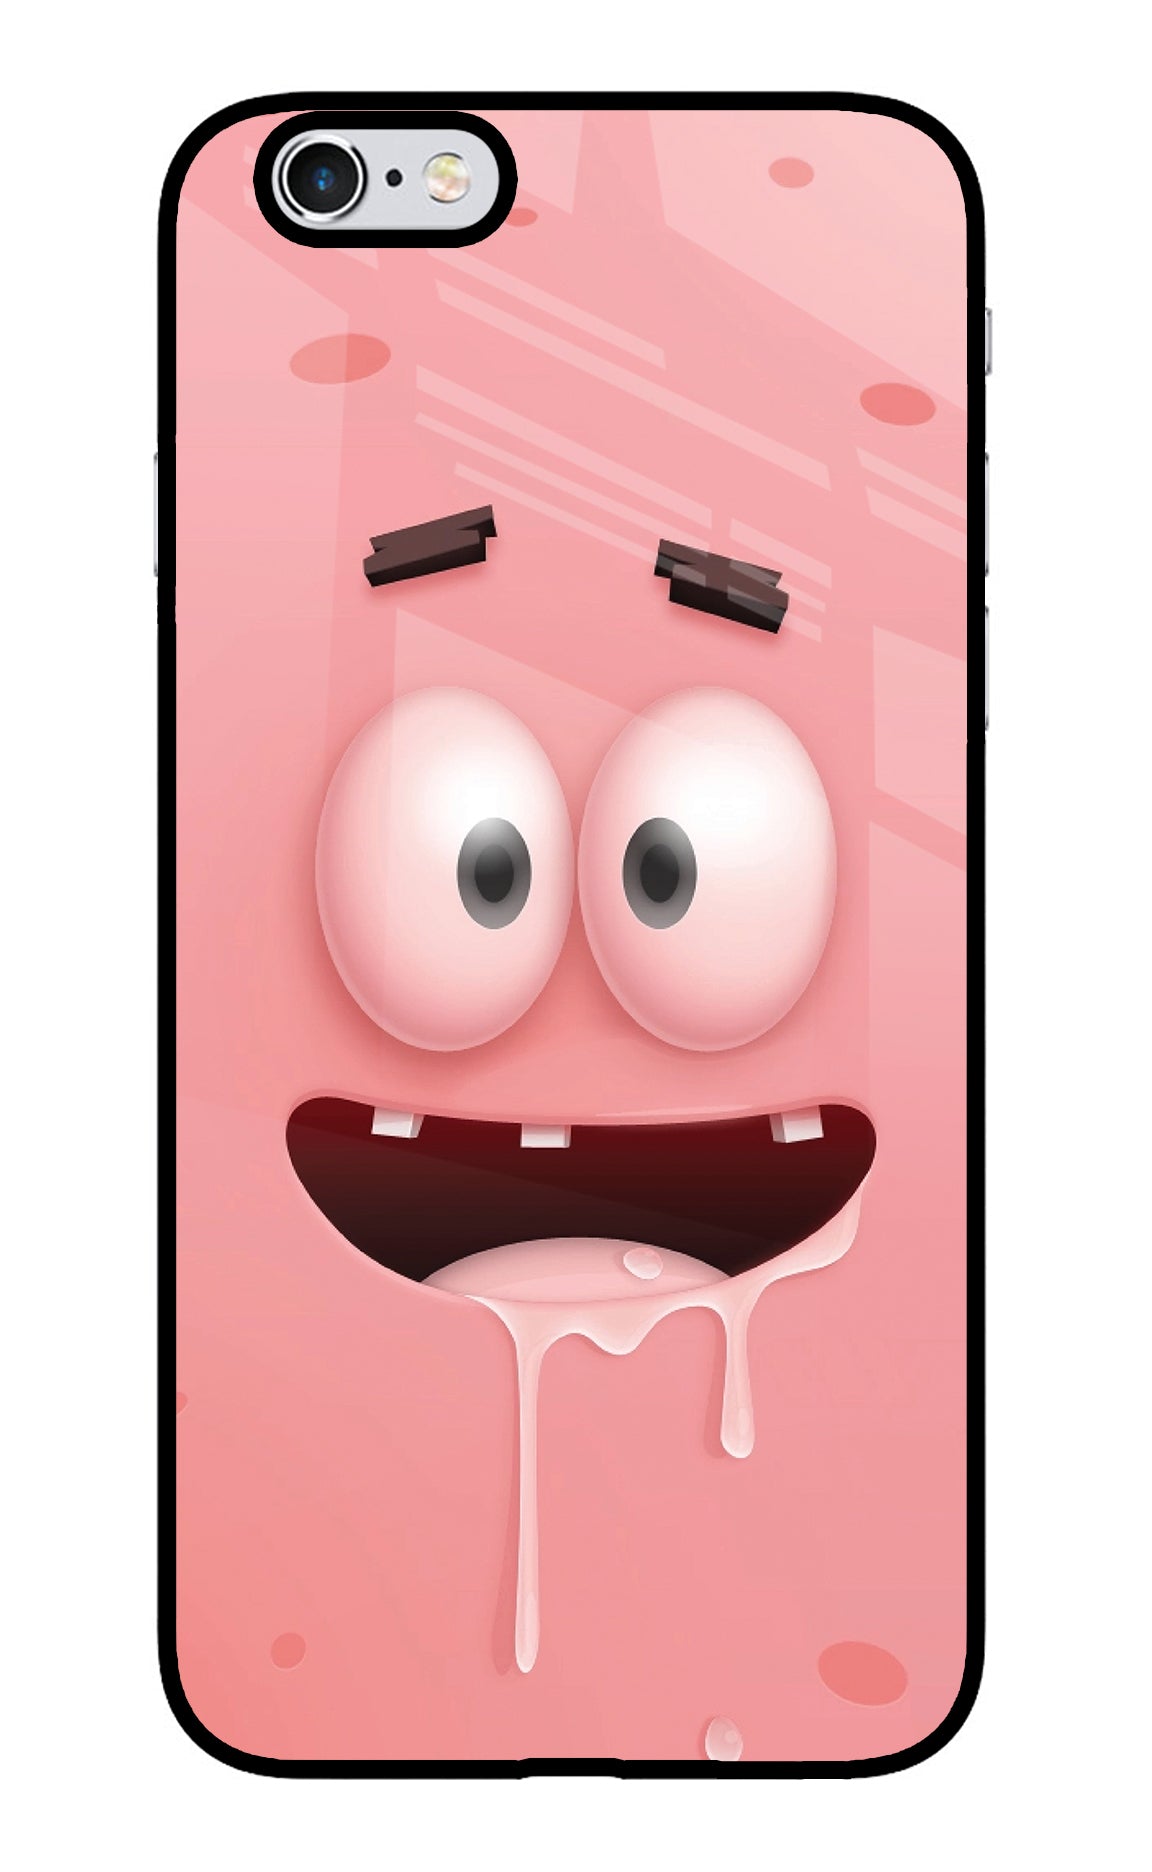 Sponge 2 iPhone 6/6s Glass Case